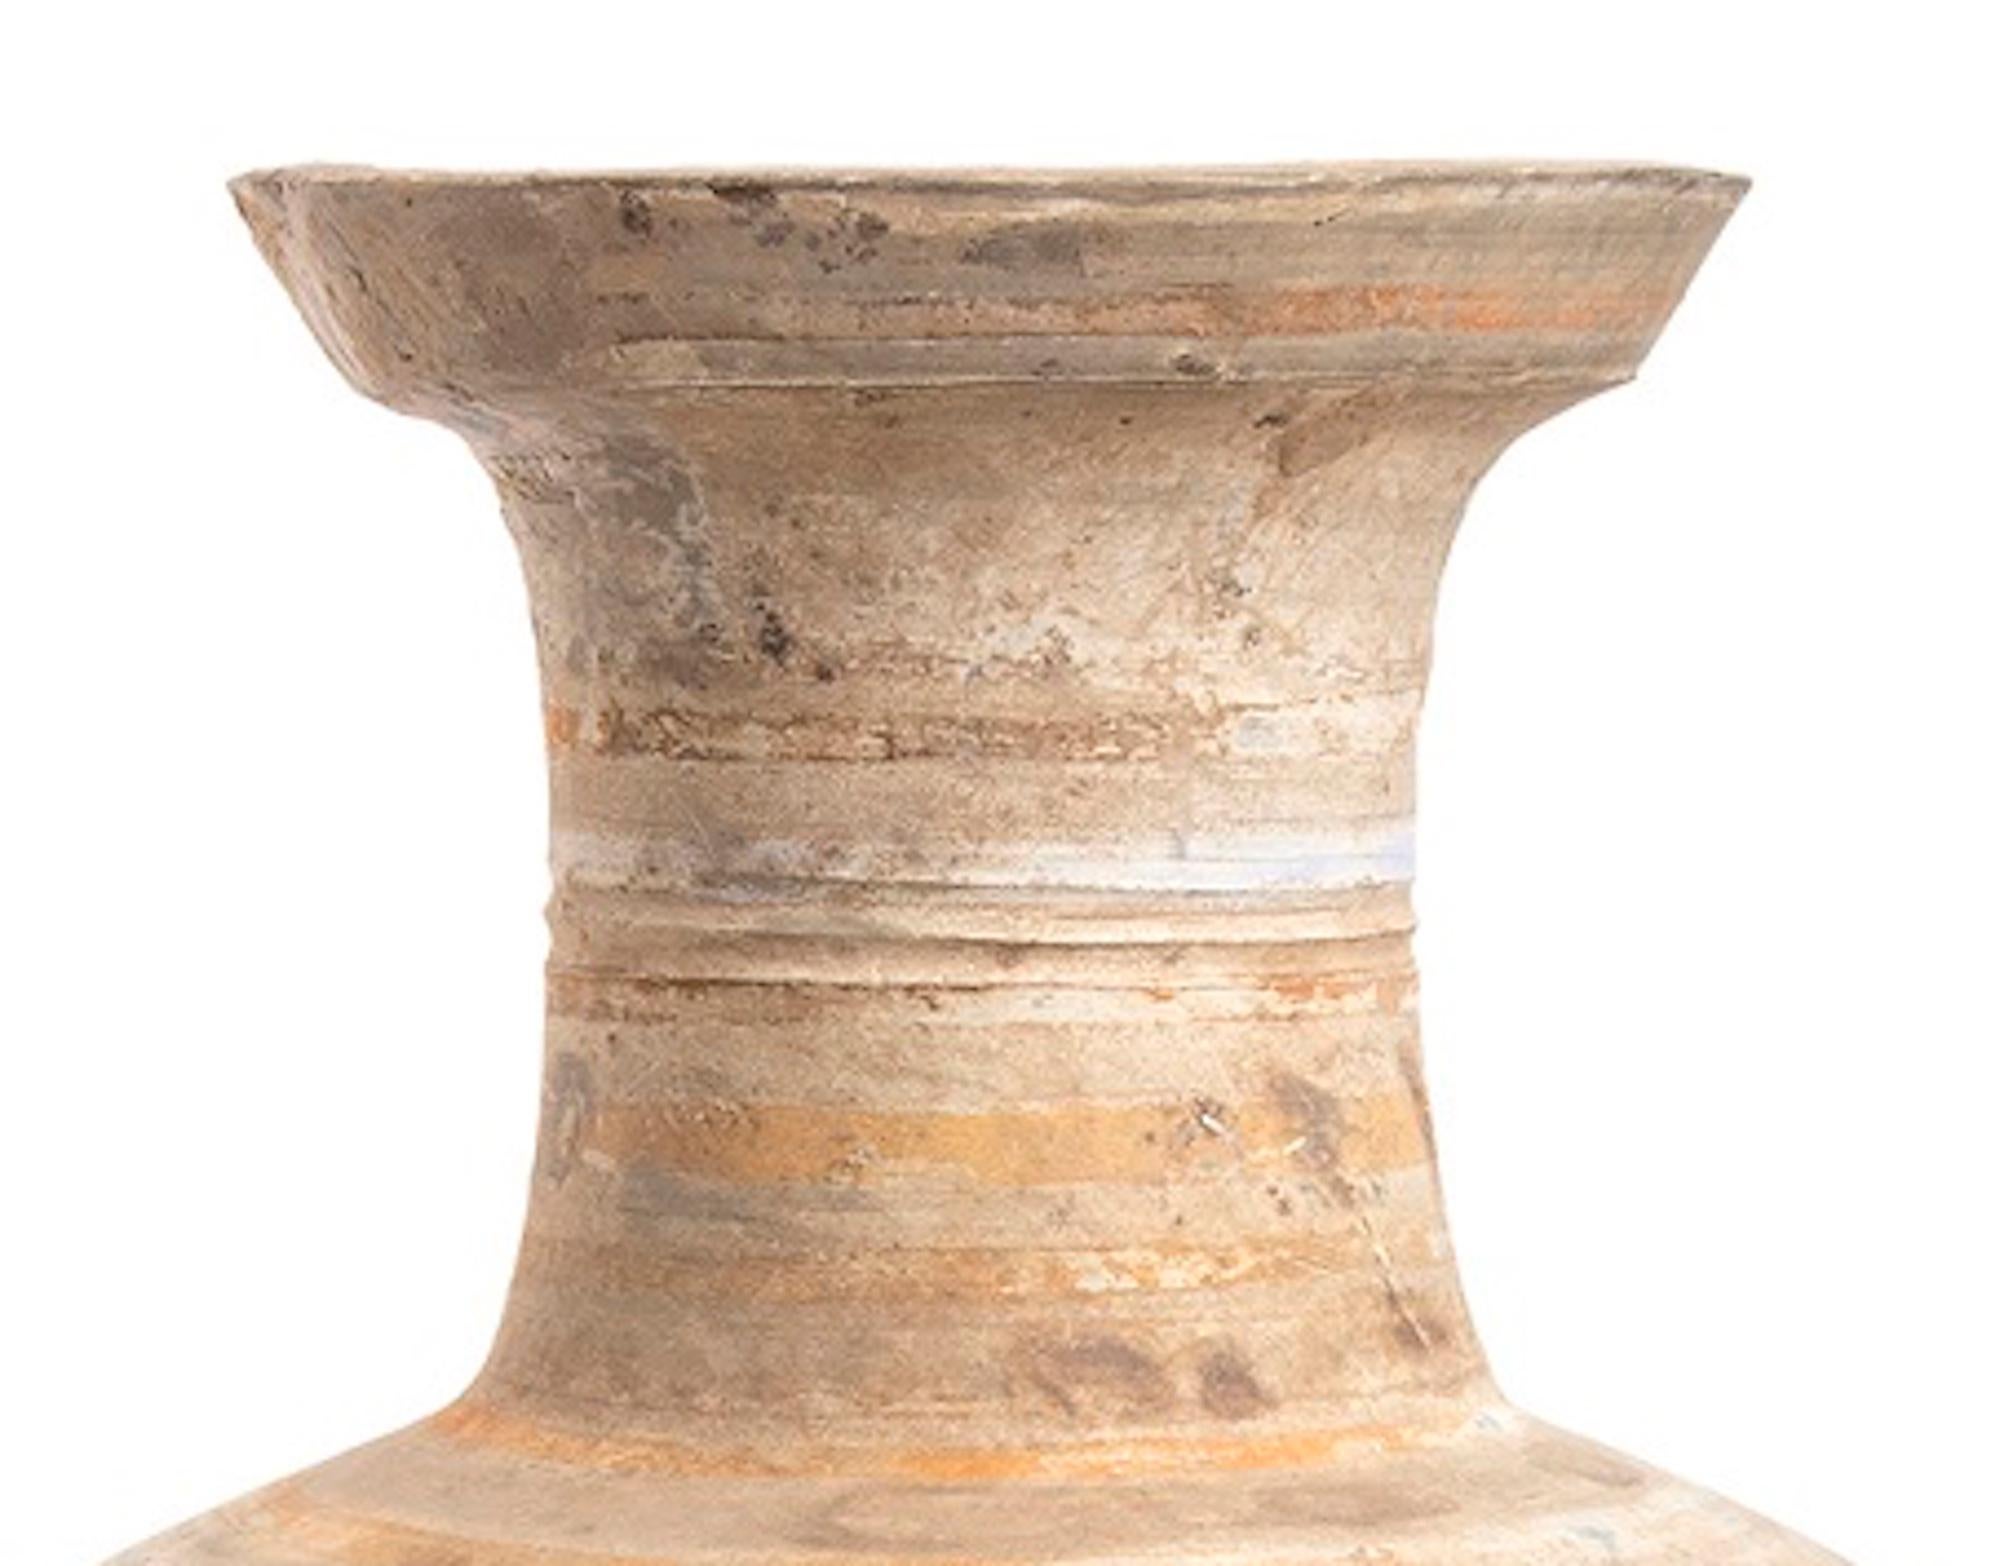 han dynasty ceramics